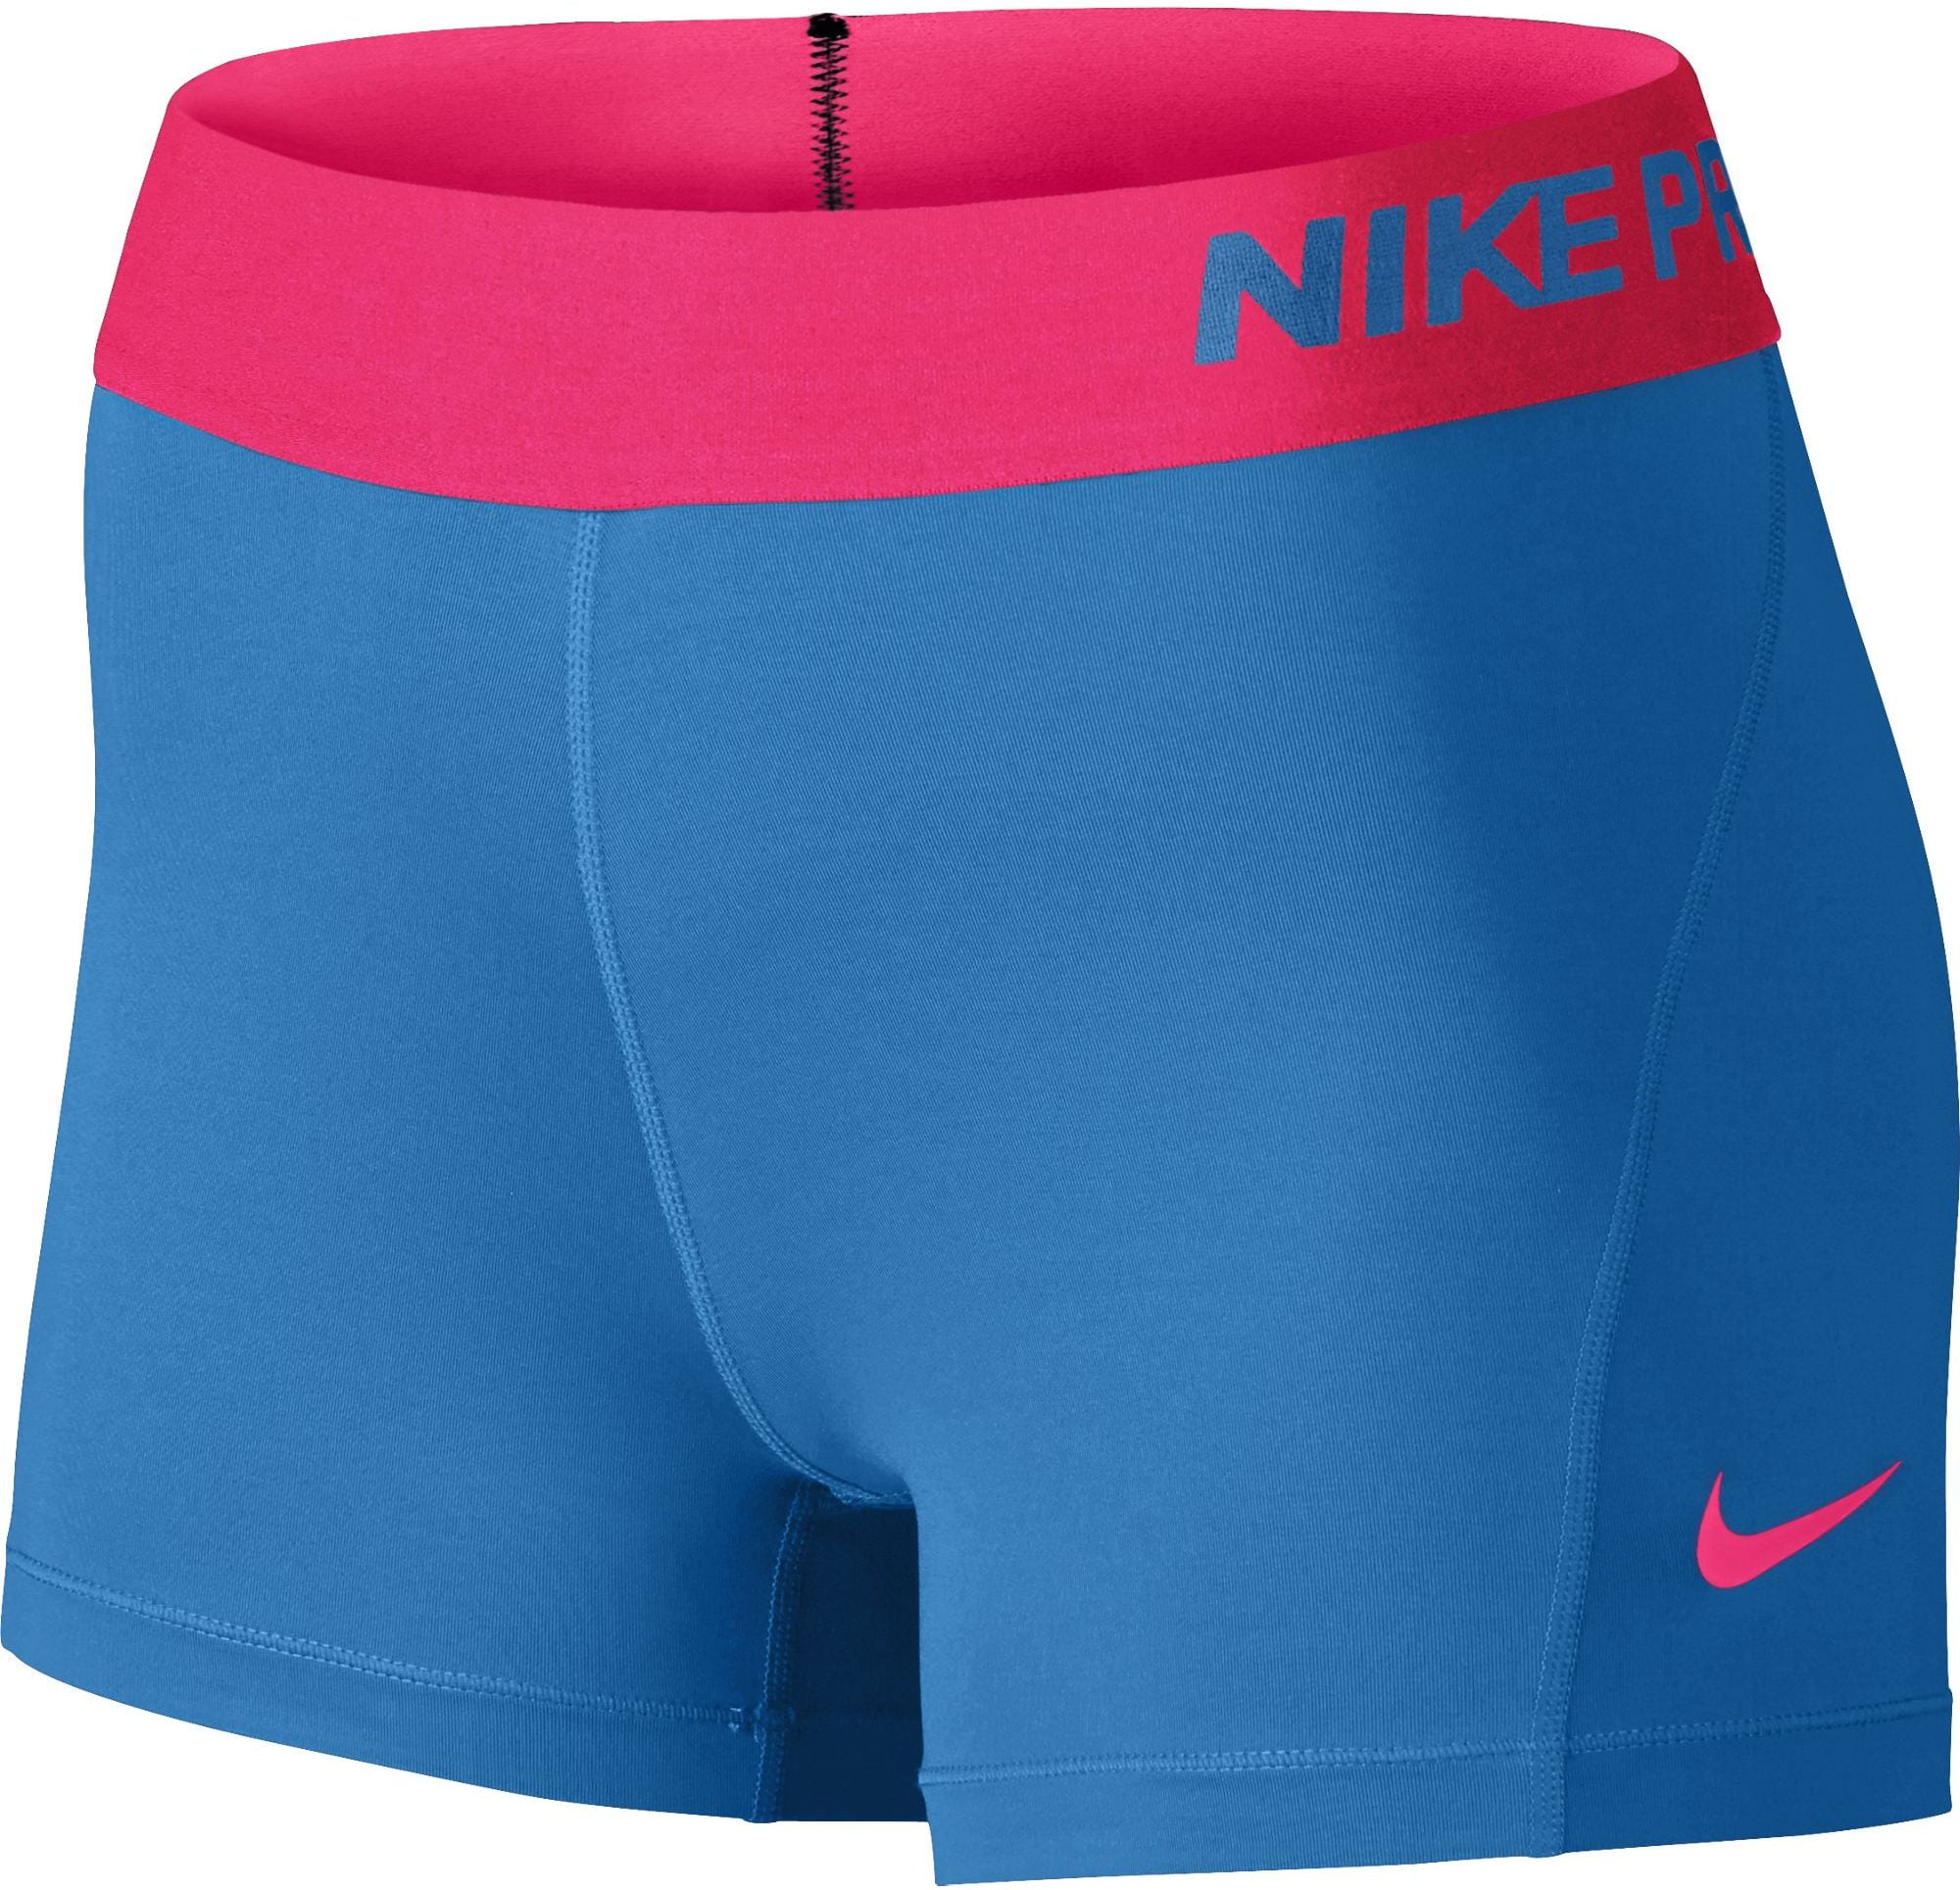 Nike Pro Cool 3" Compression Short (Light Photo Pink/Hyper Pink, X-Small) - Walmart.com